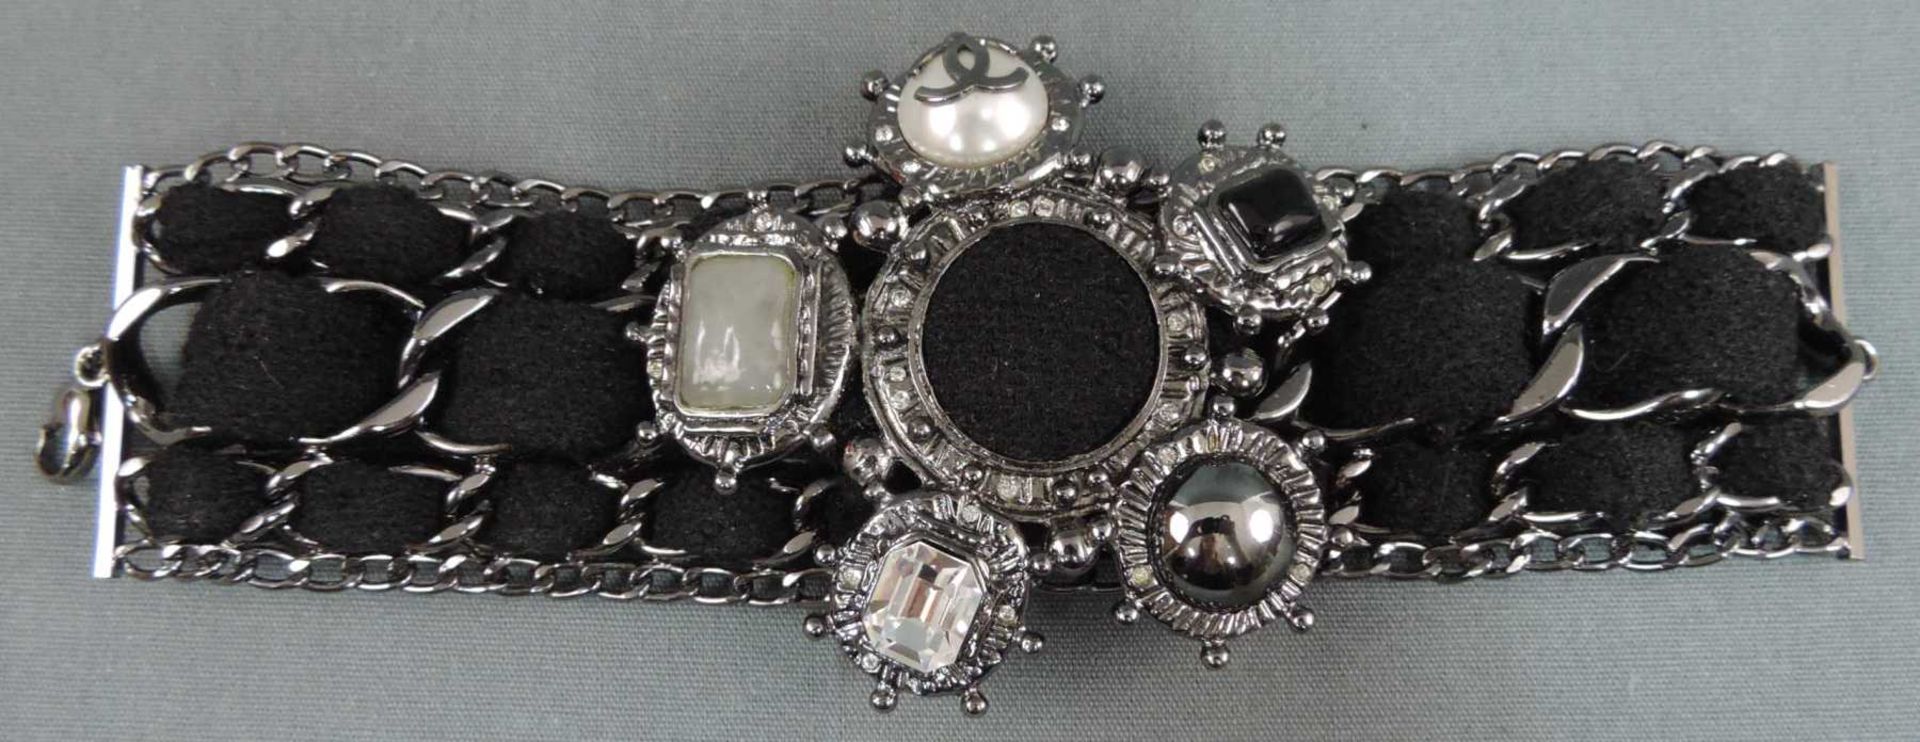 Chanel Armkette. Modeschmuck. 198 mm lang. Chanel bracelet. Fashion jewelry. 198 mm long.